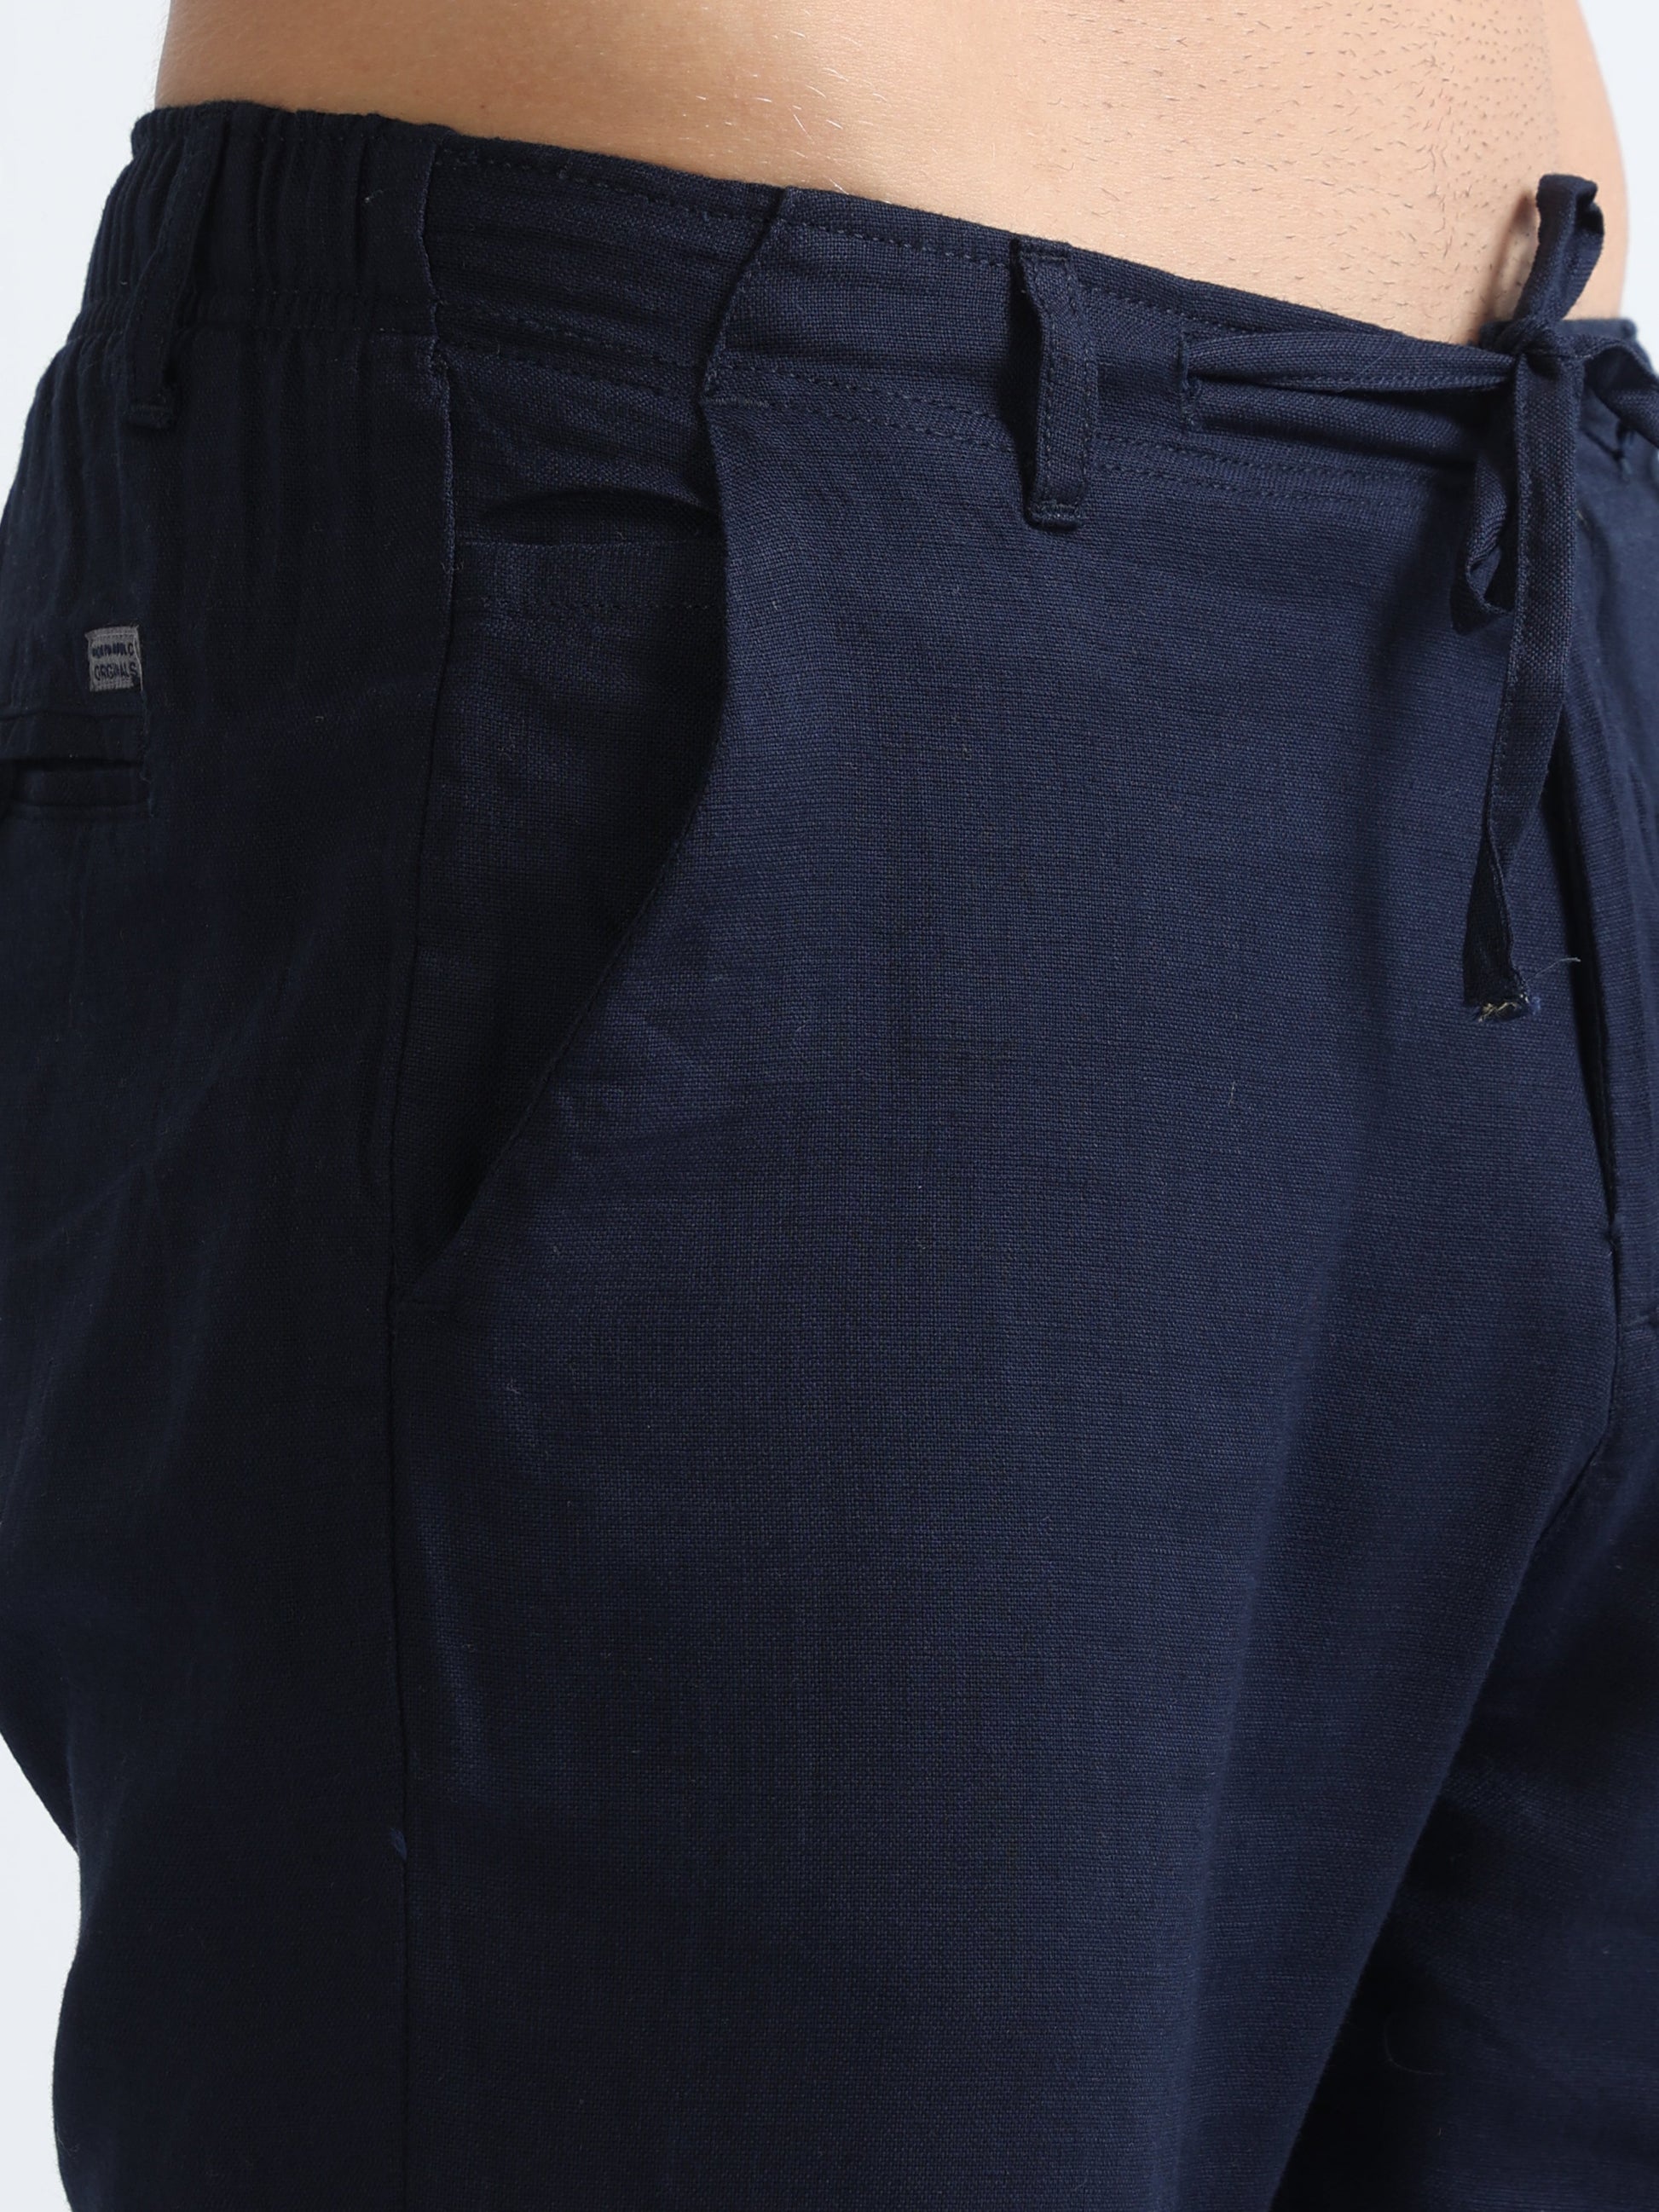 Navy Men's Drawcod Linen Fashion Pant